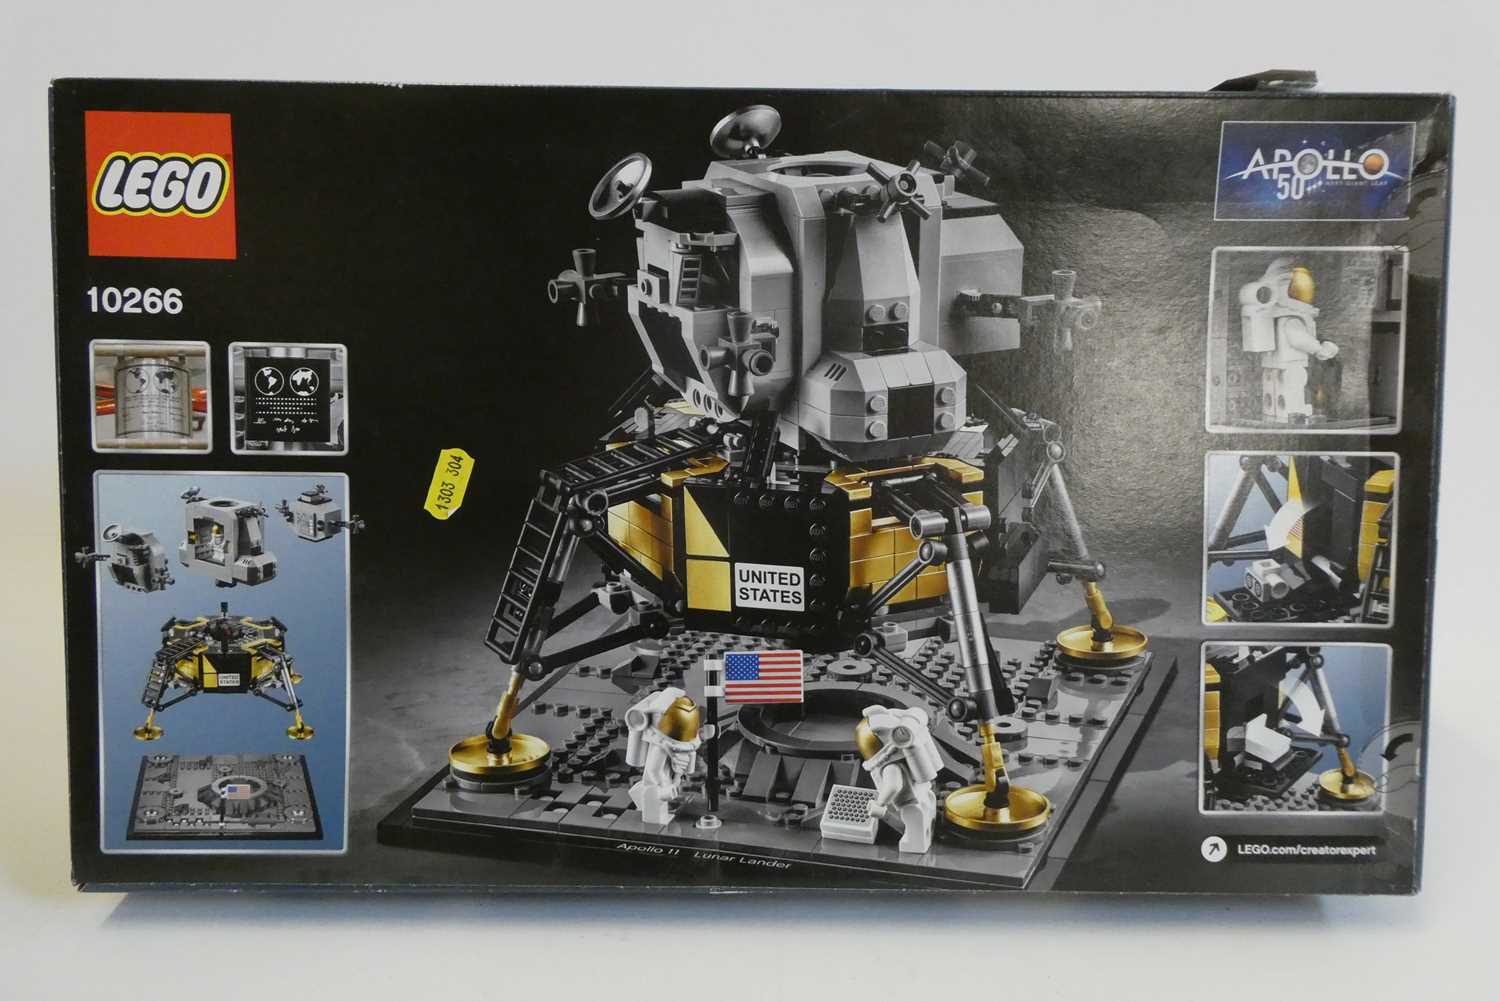 Lego set 10266, Apollo 50, boxed, unopened